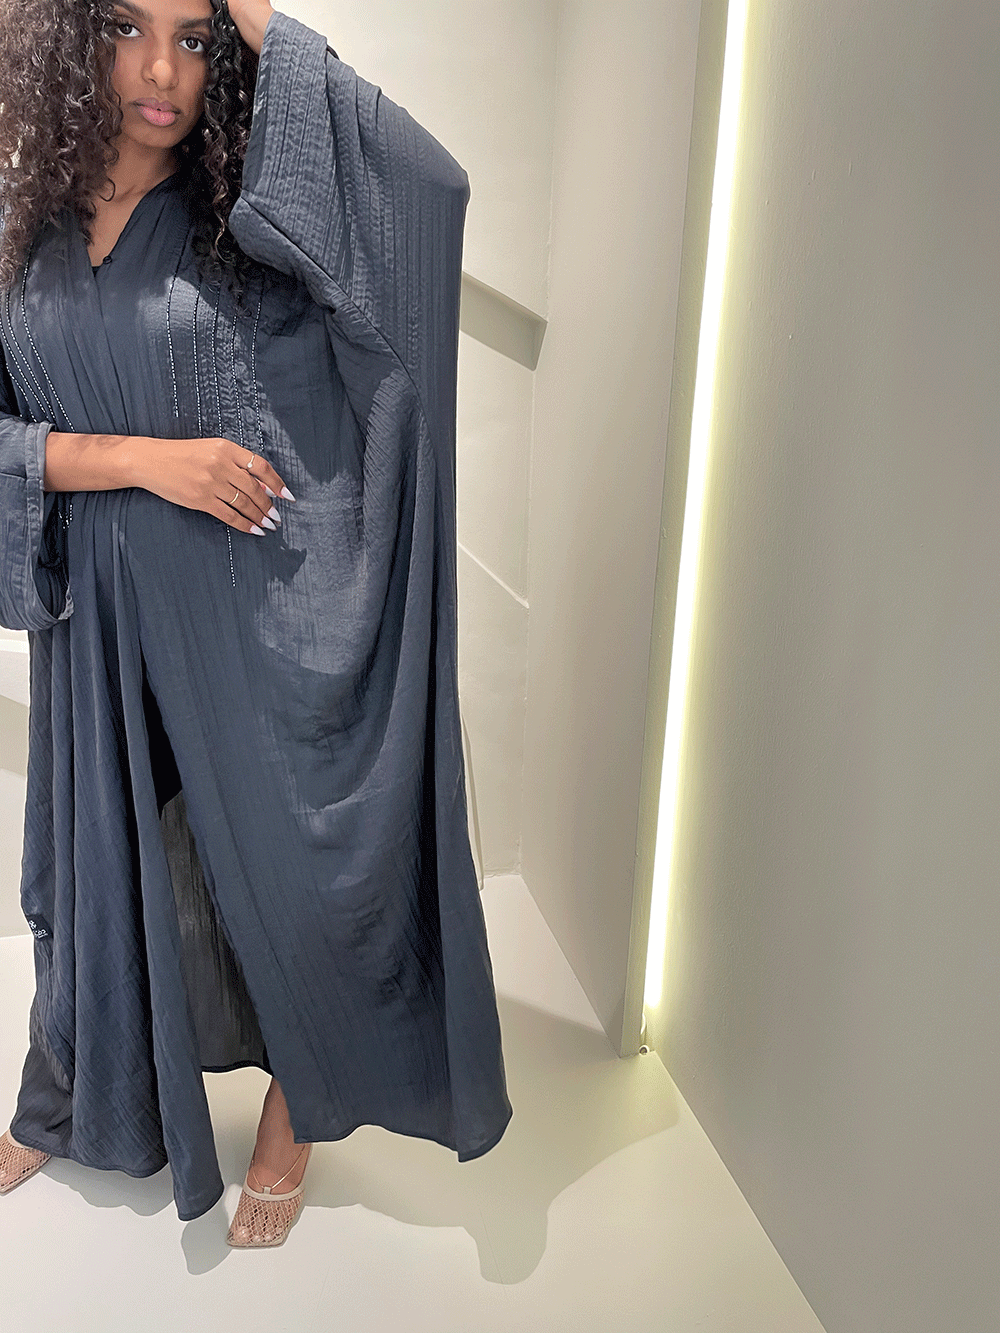 Classic gray abaya